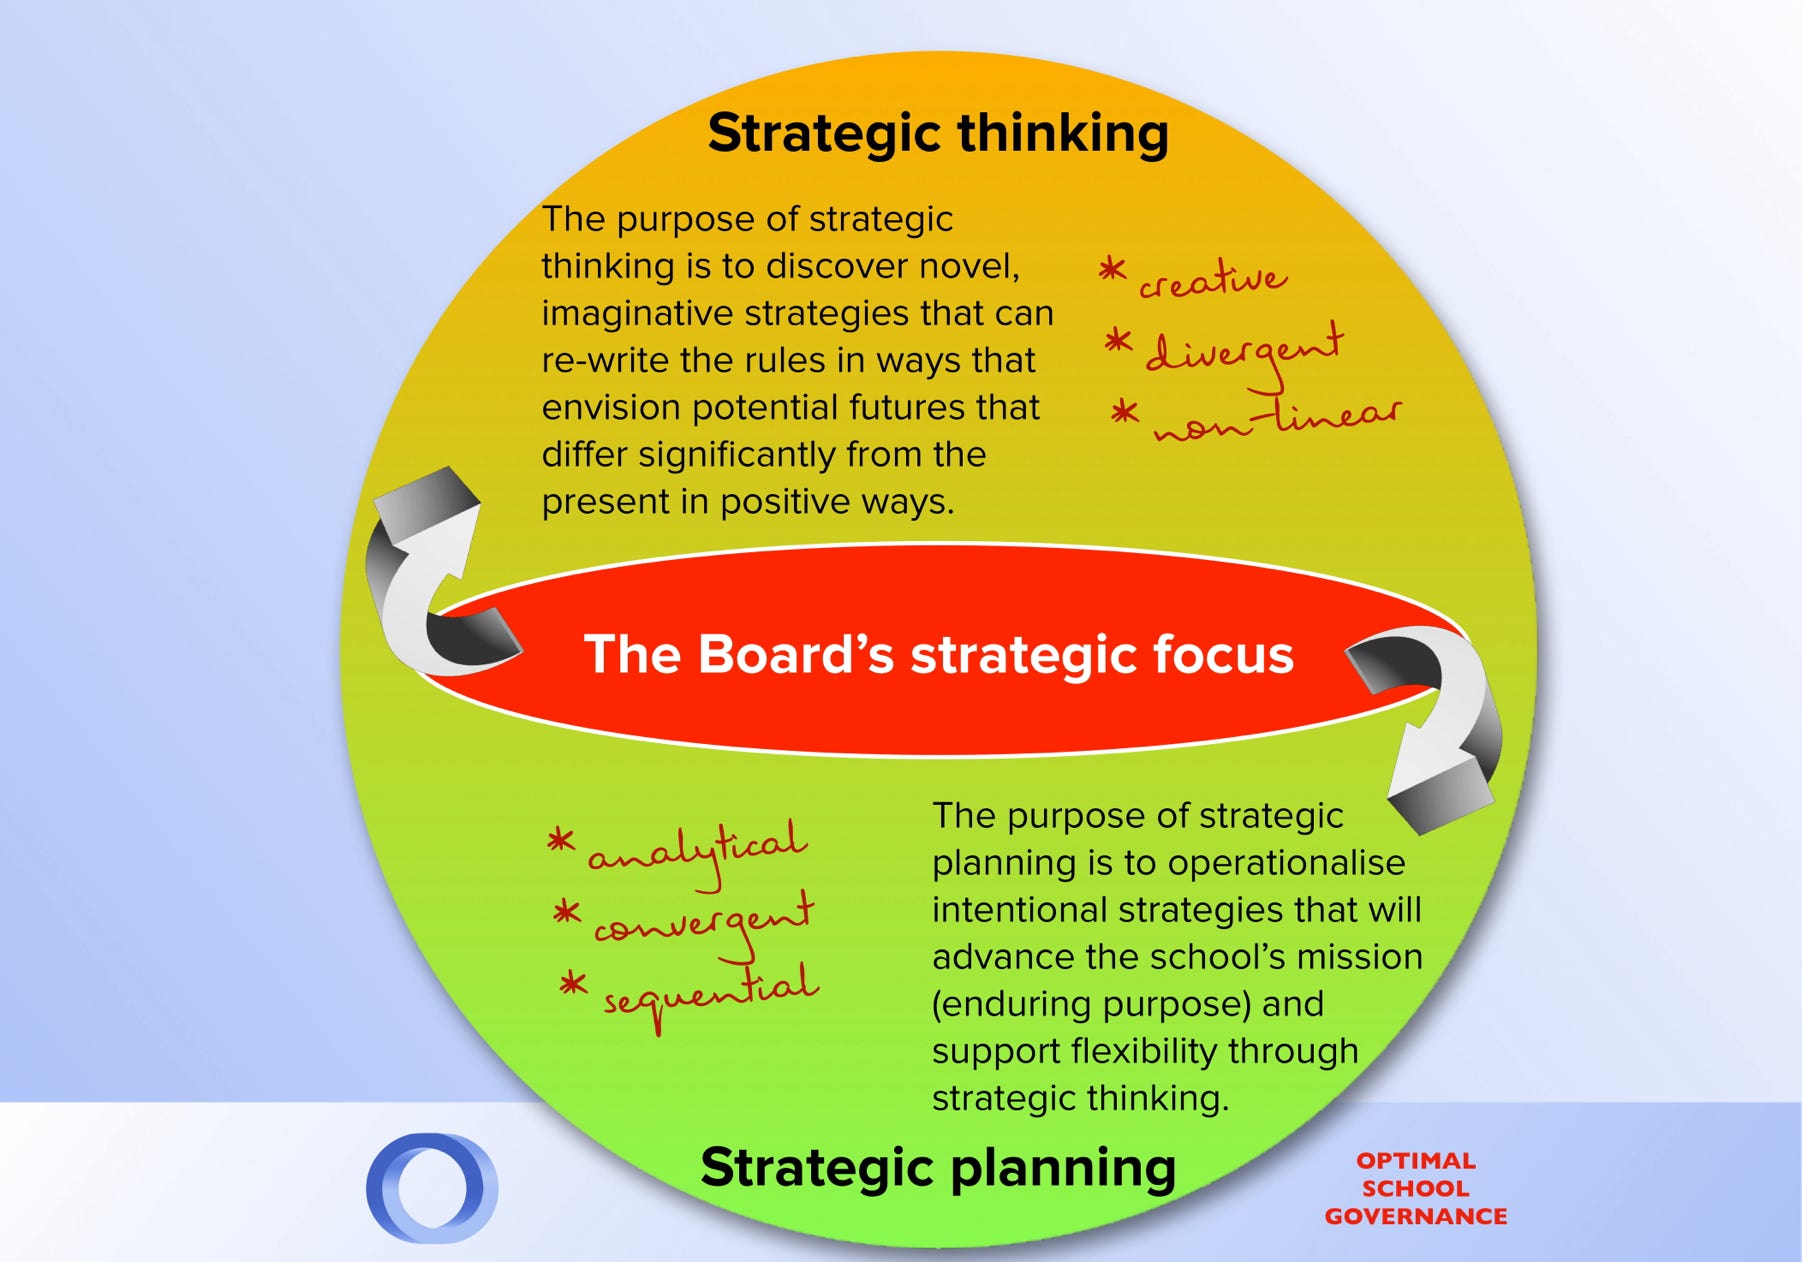 The strategic focus of a school board